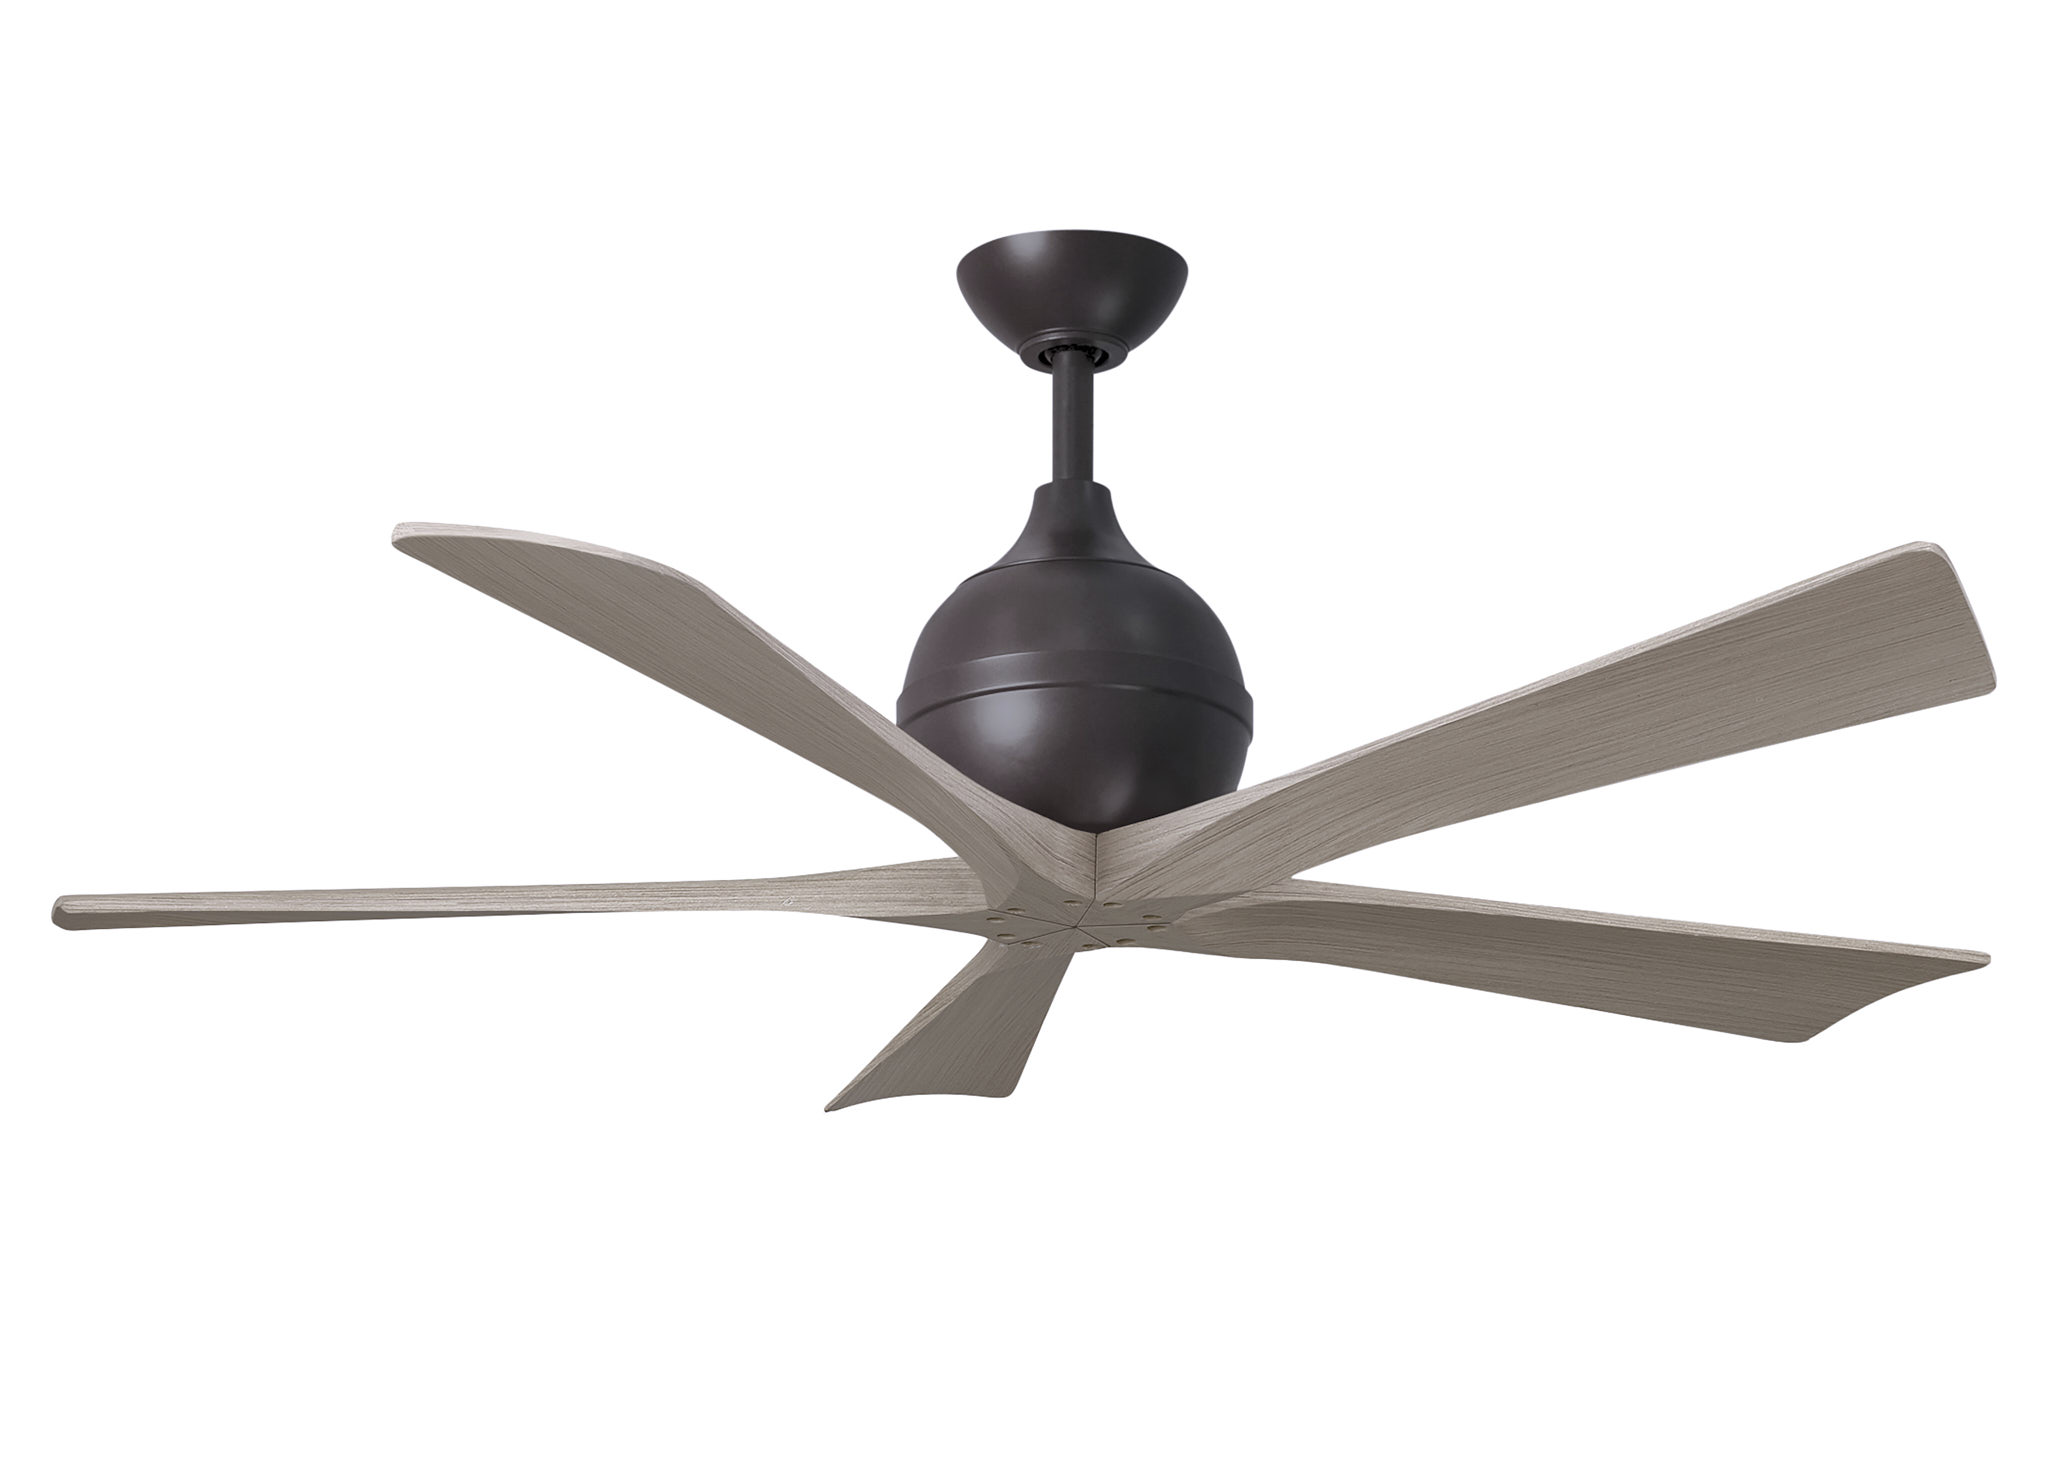 Irene-5 ceiling fan in textured bronze with 52